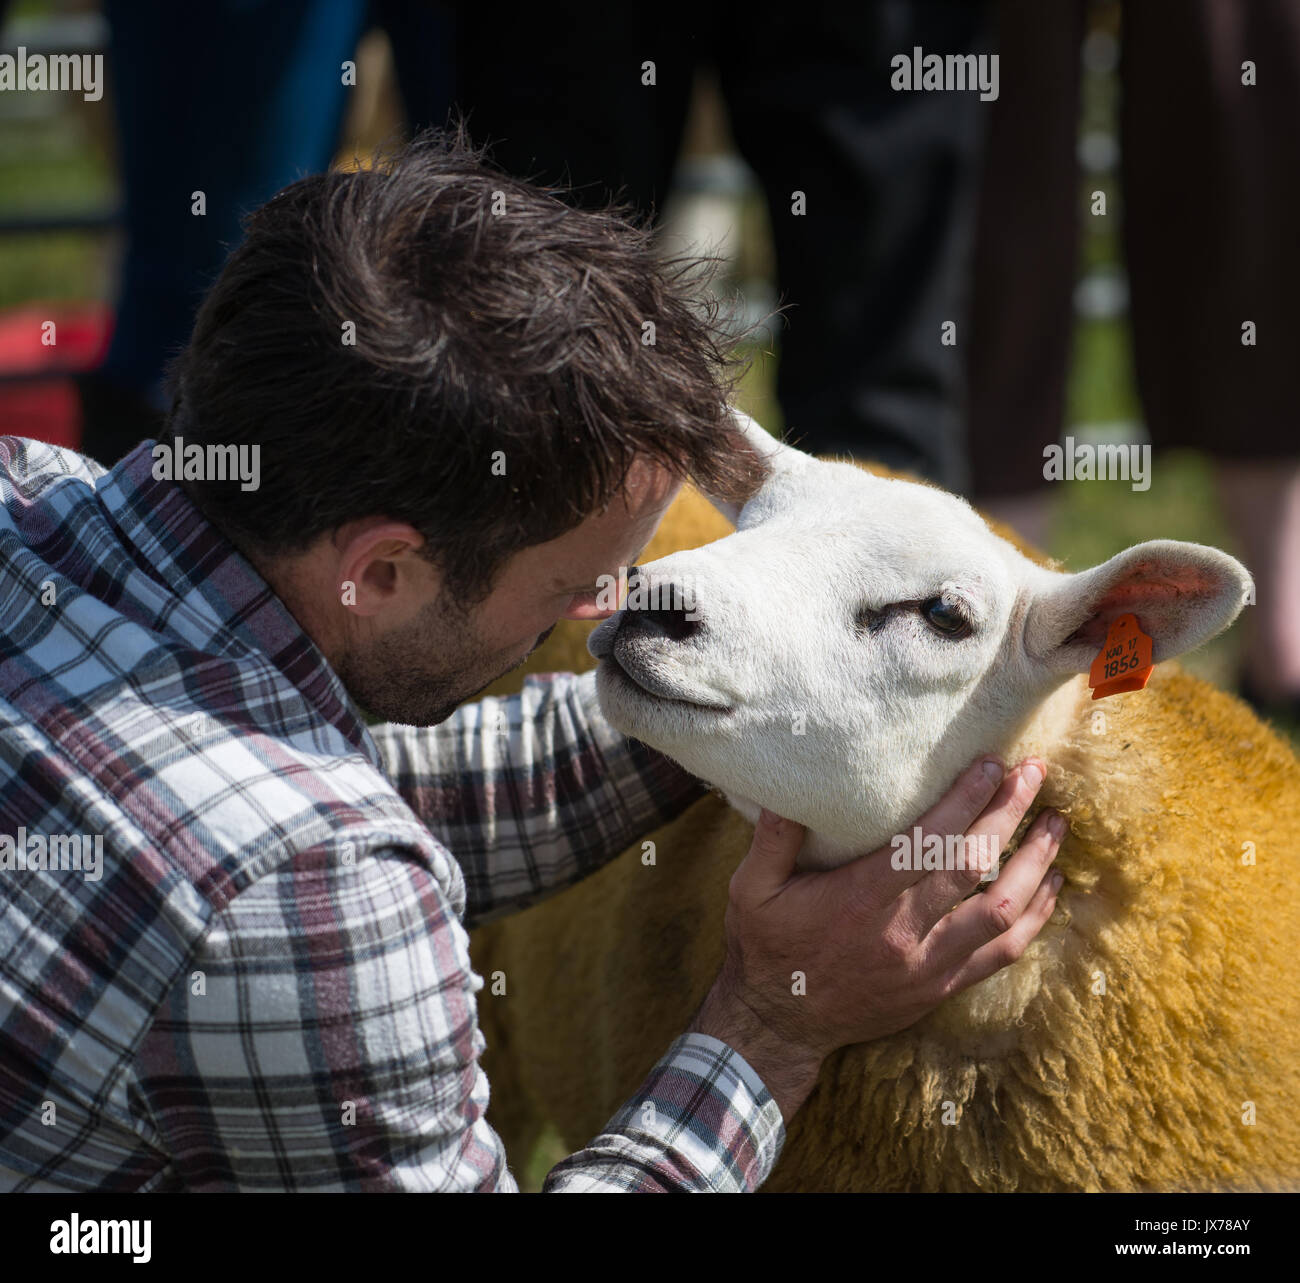 Texel sheep dyed orange sniffing man's face Stock Photo